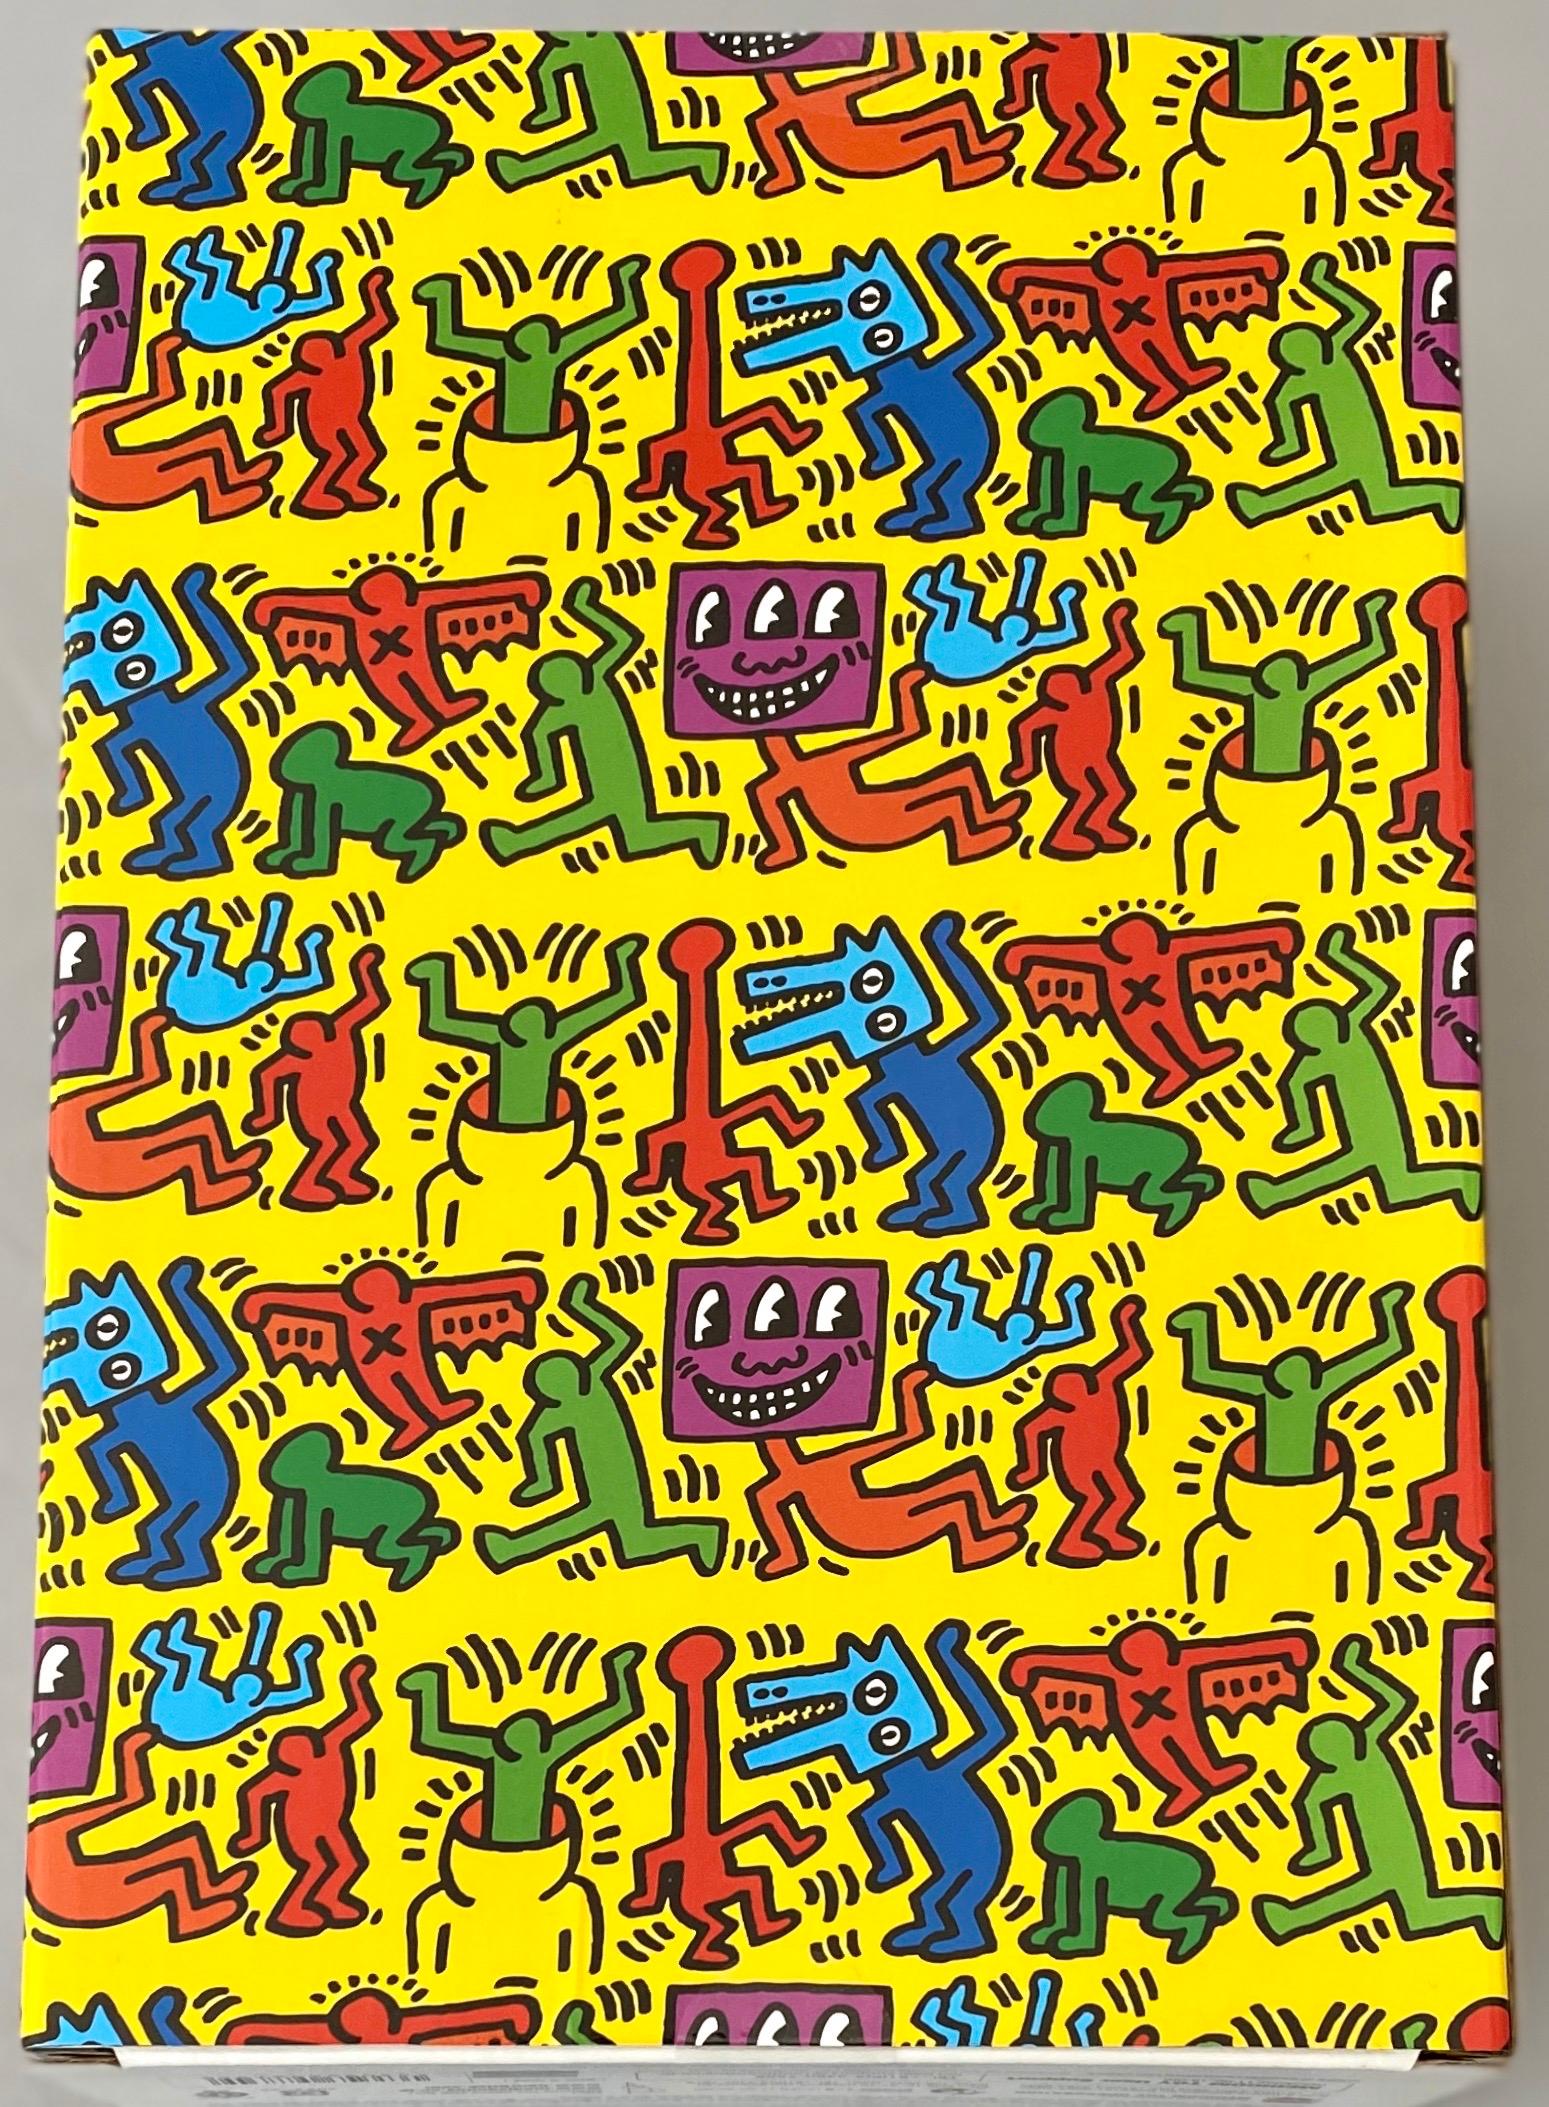 Keith Haring 400% Bearbrick Companion (Haring BE@RBRICK) 2